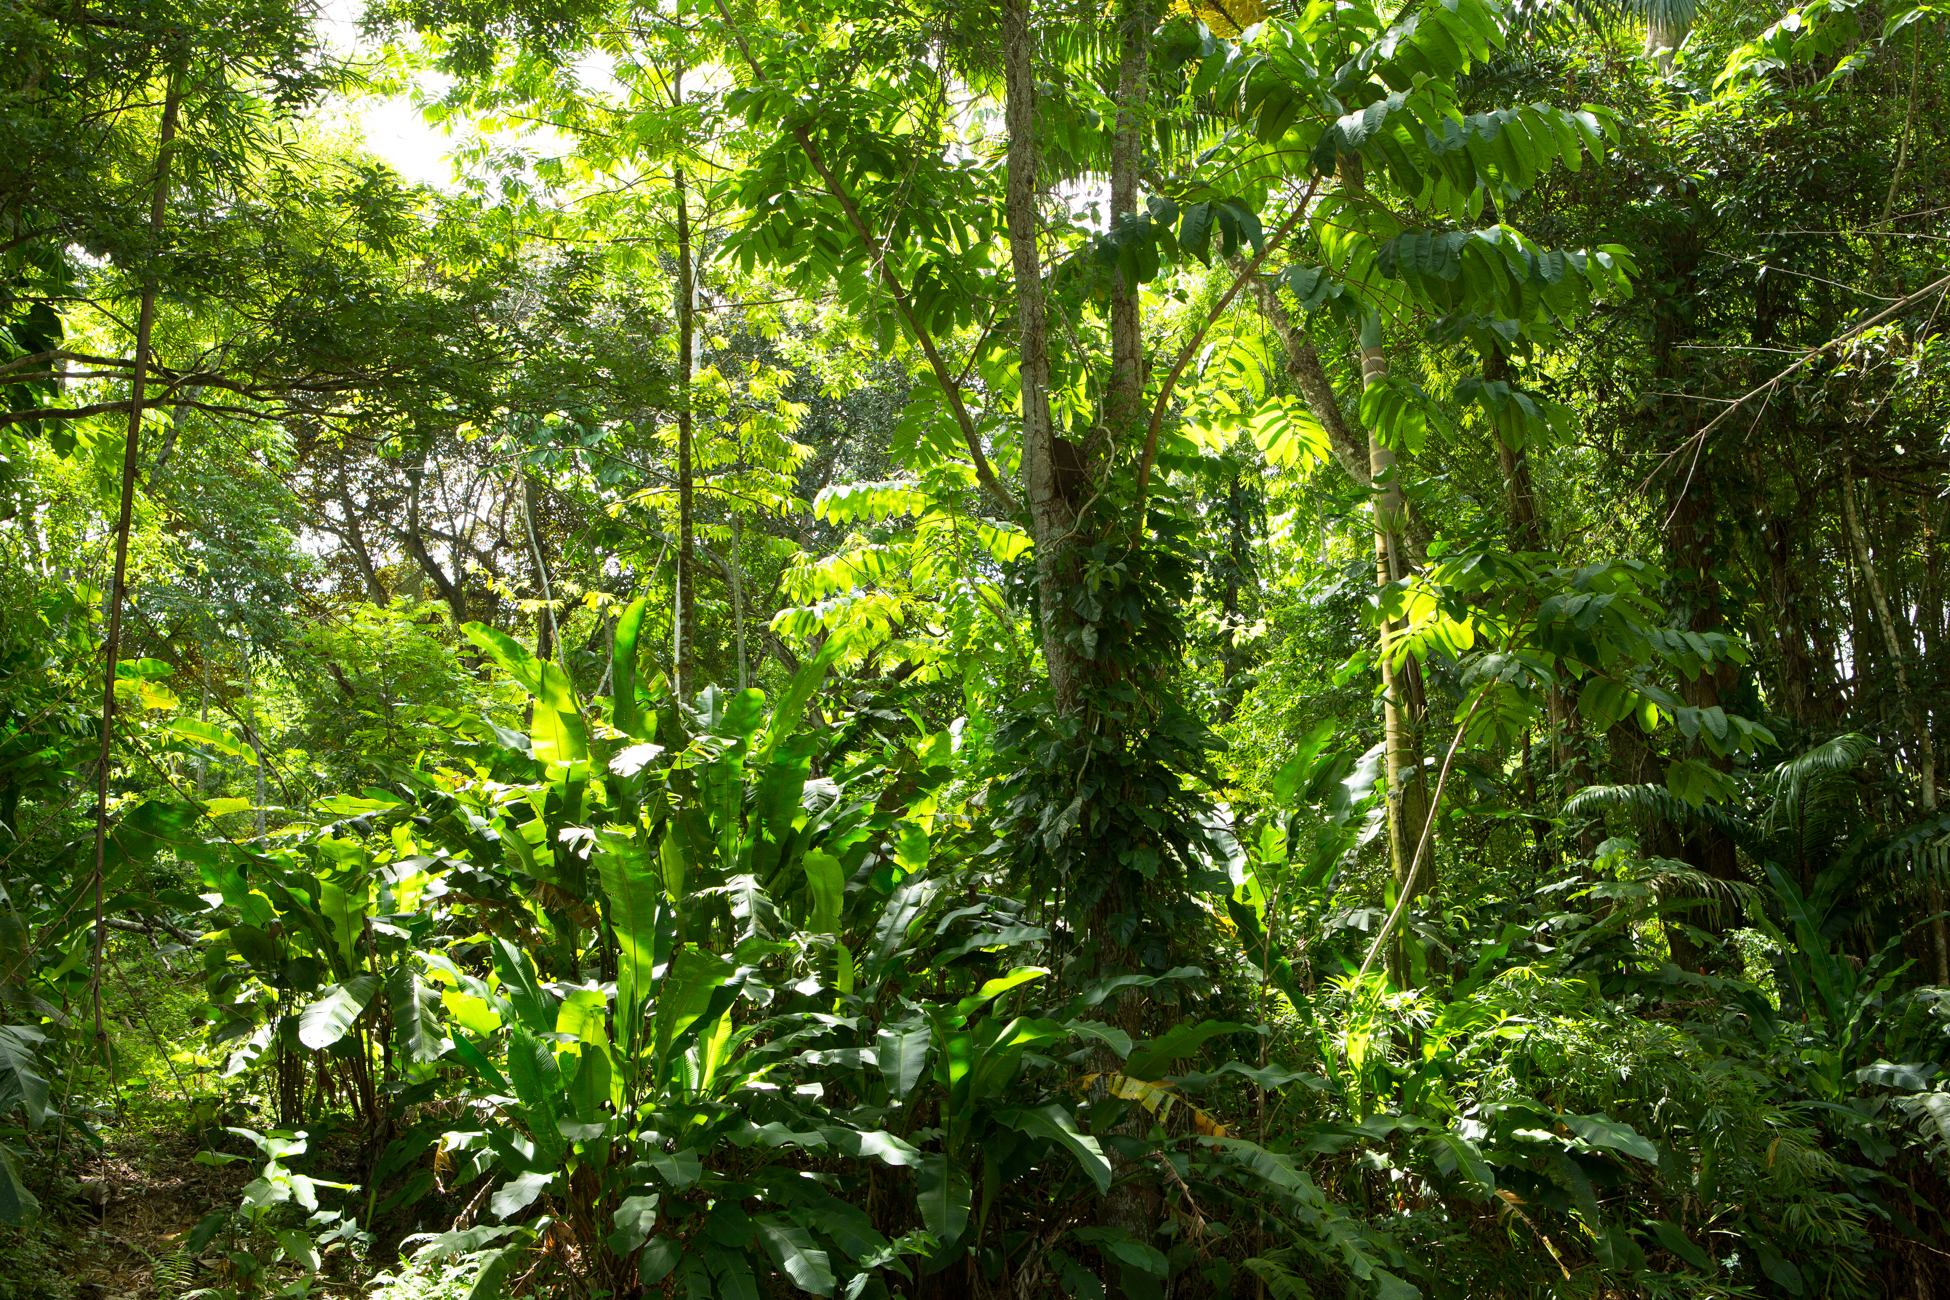  Jungle I, 2013 //  80 cm x 120 cm  